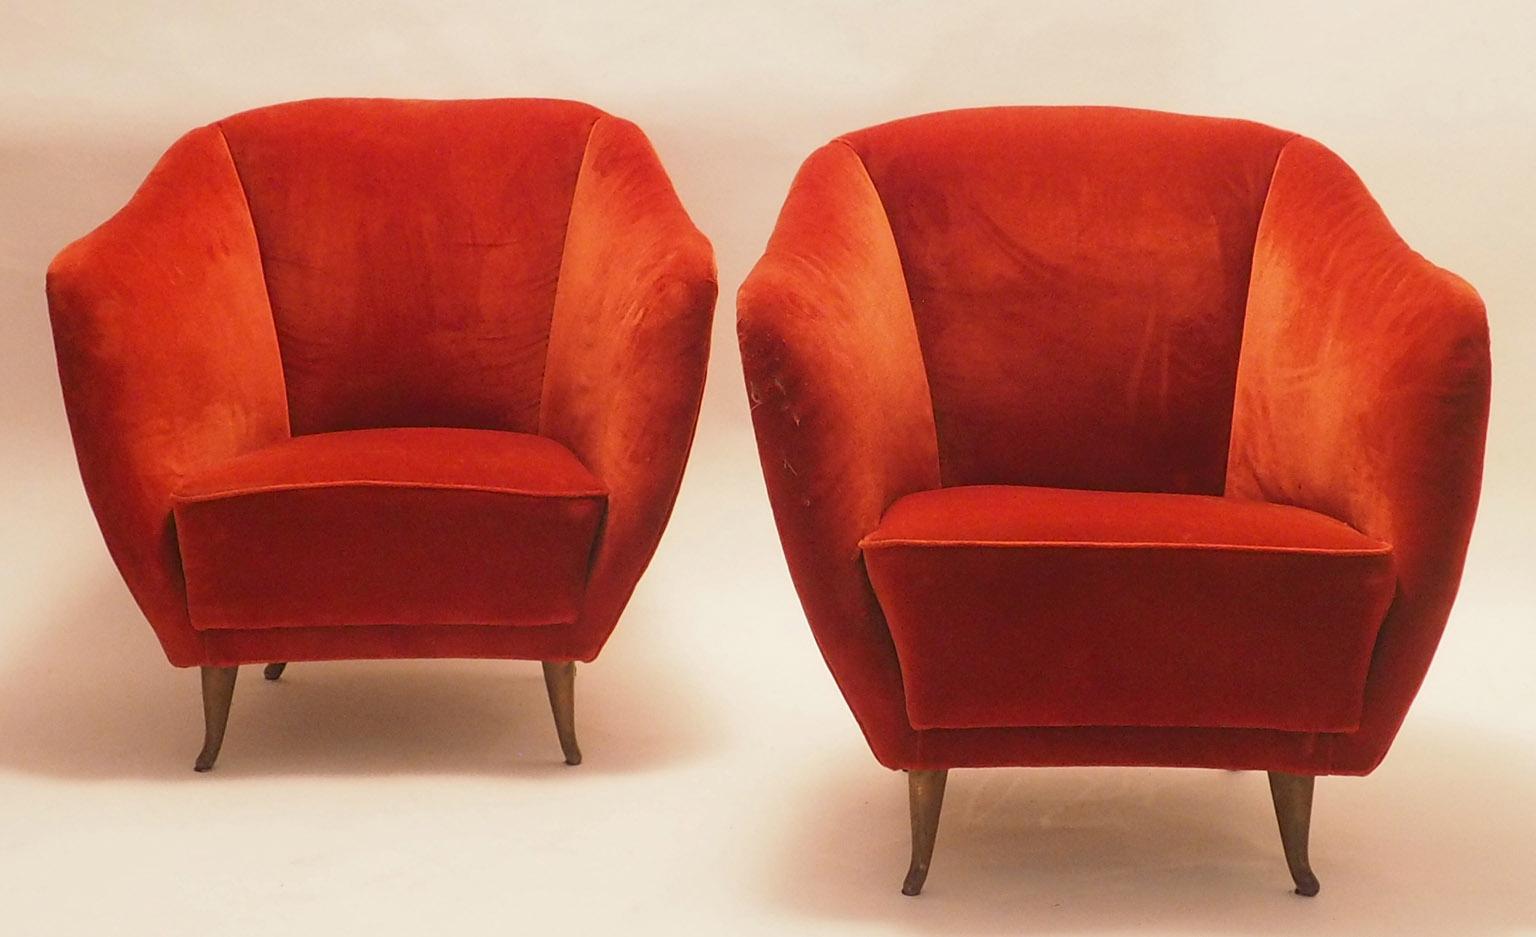 Pair of Midcentury Velvet Italian Armchairs with Typical ISA Feet, Italy, 1950s (Moderne der Mitte des Jahrhunderts)